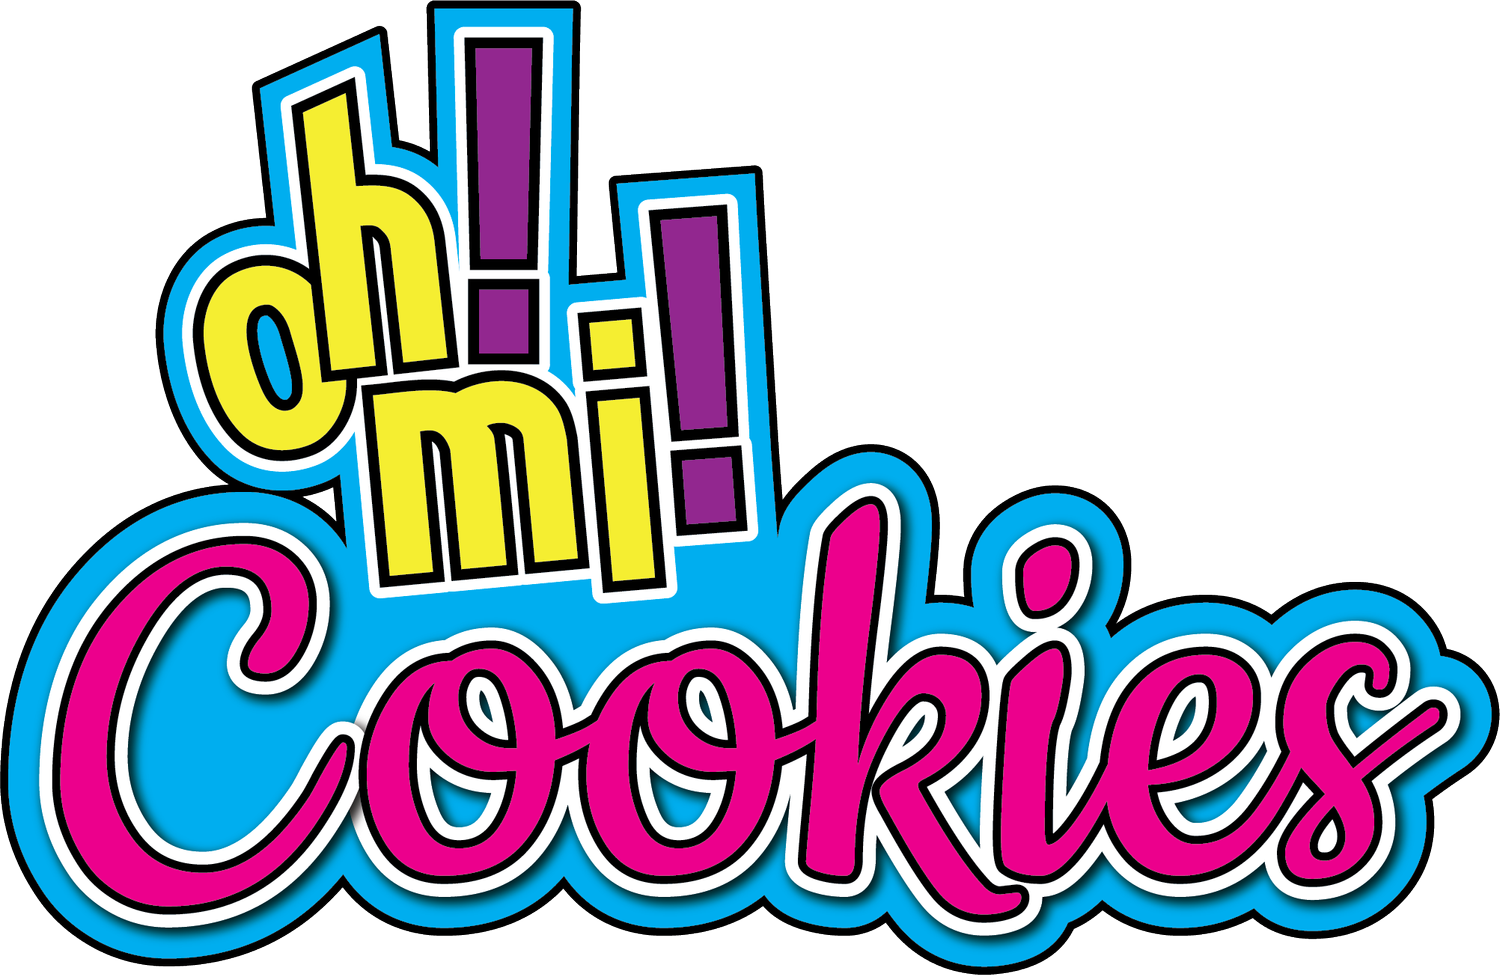 oh!mi! cookies